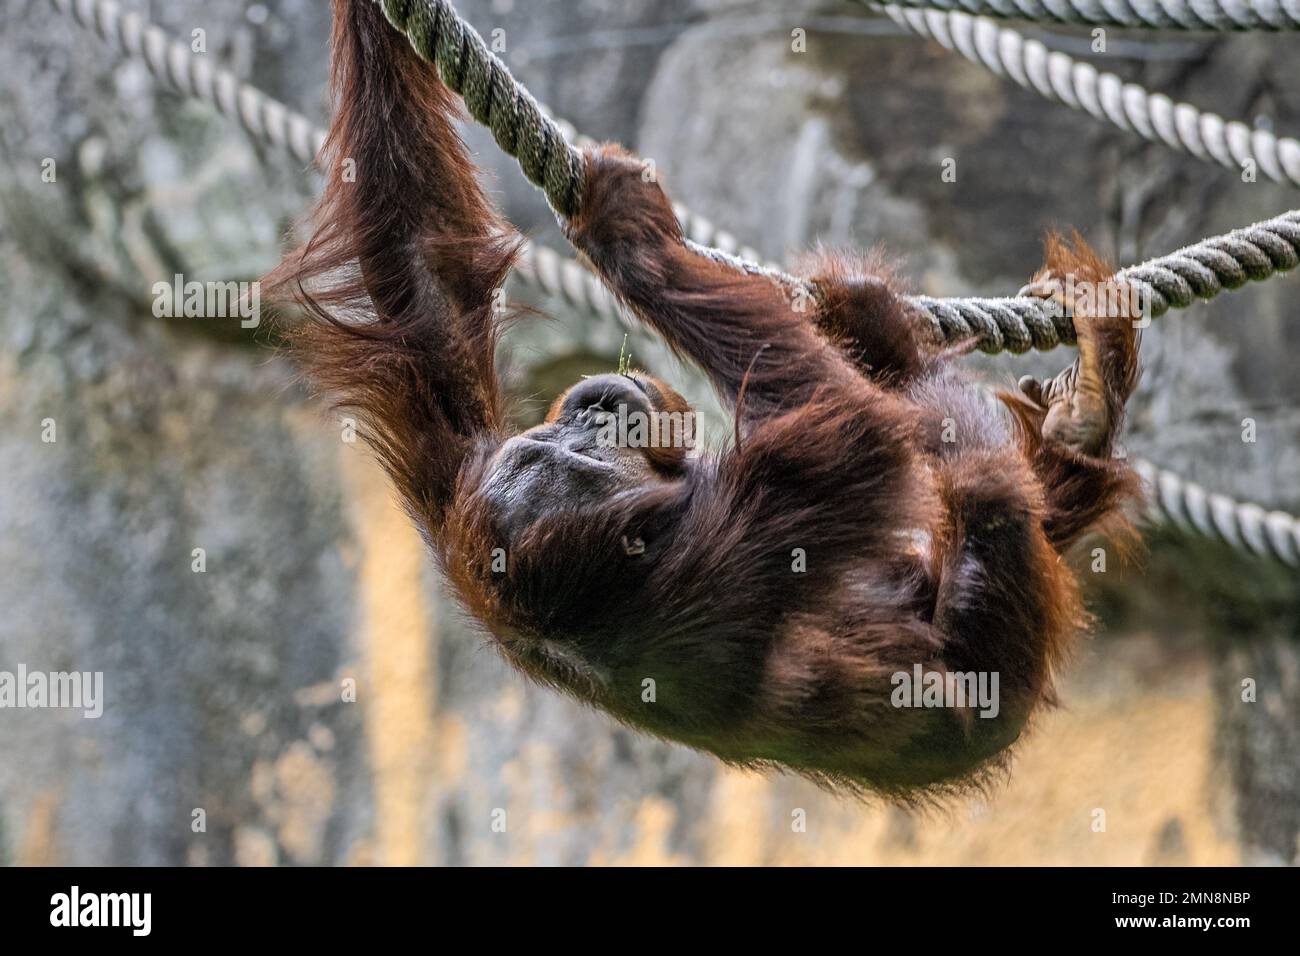 Orangutan, a critically endangered great ape from Southeast Asia, climbing ropes at Zoo Atlanta near downtown Atlanta, Georgia. (USA) Stock Photo